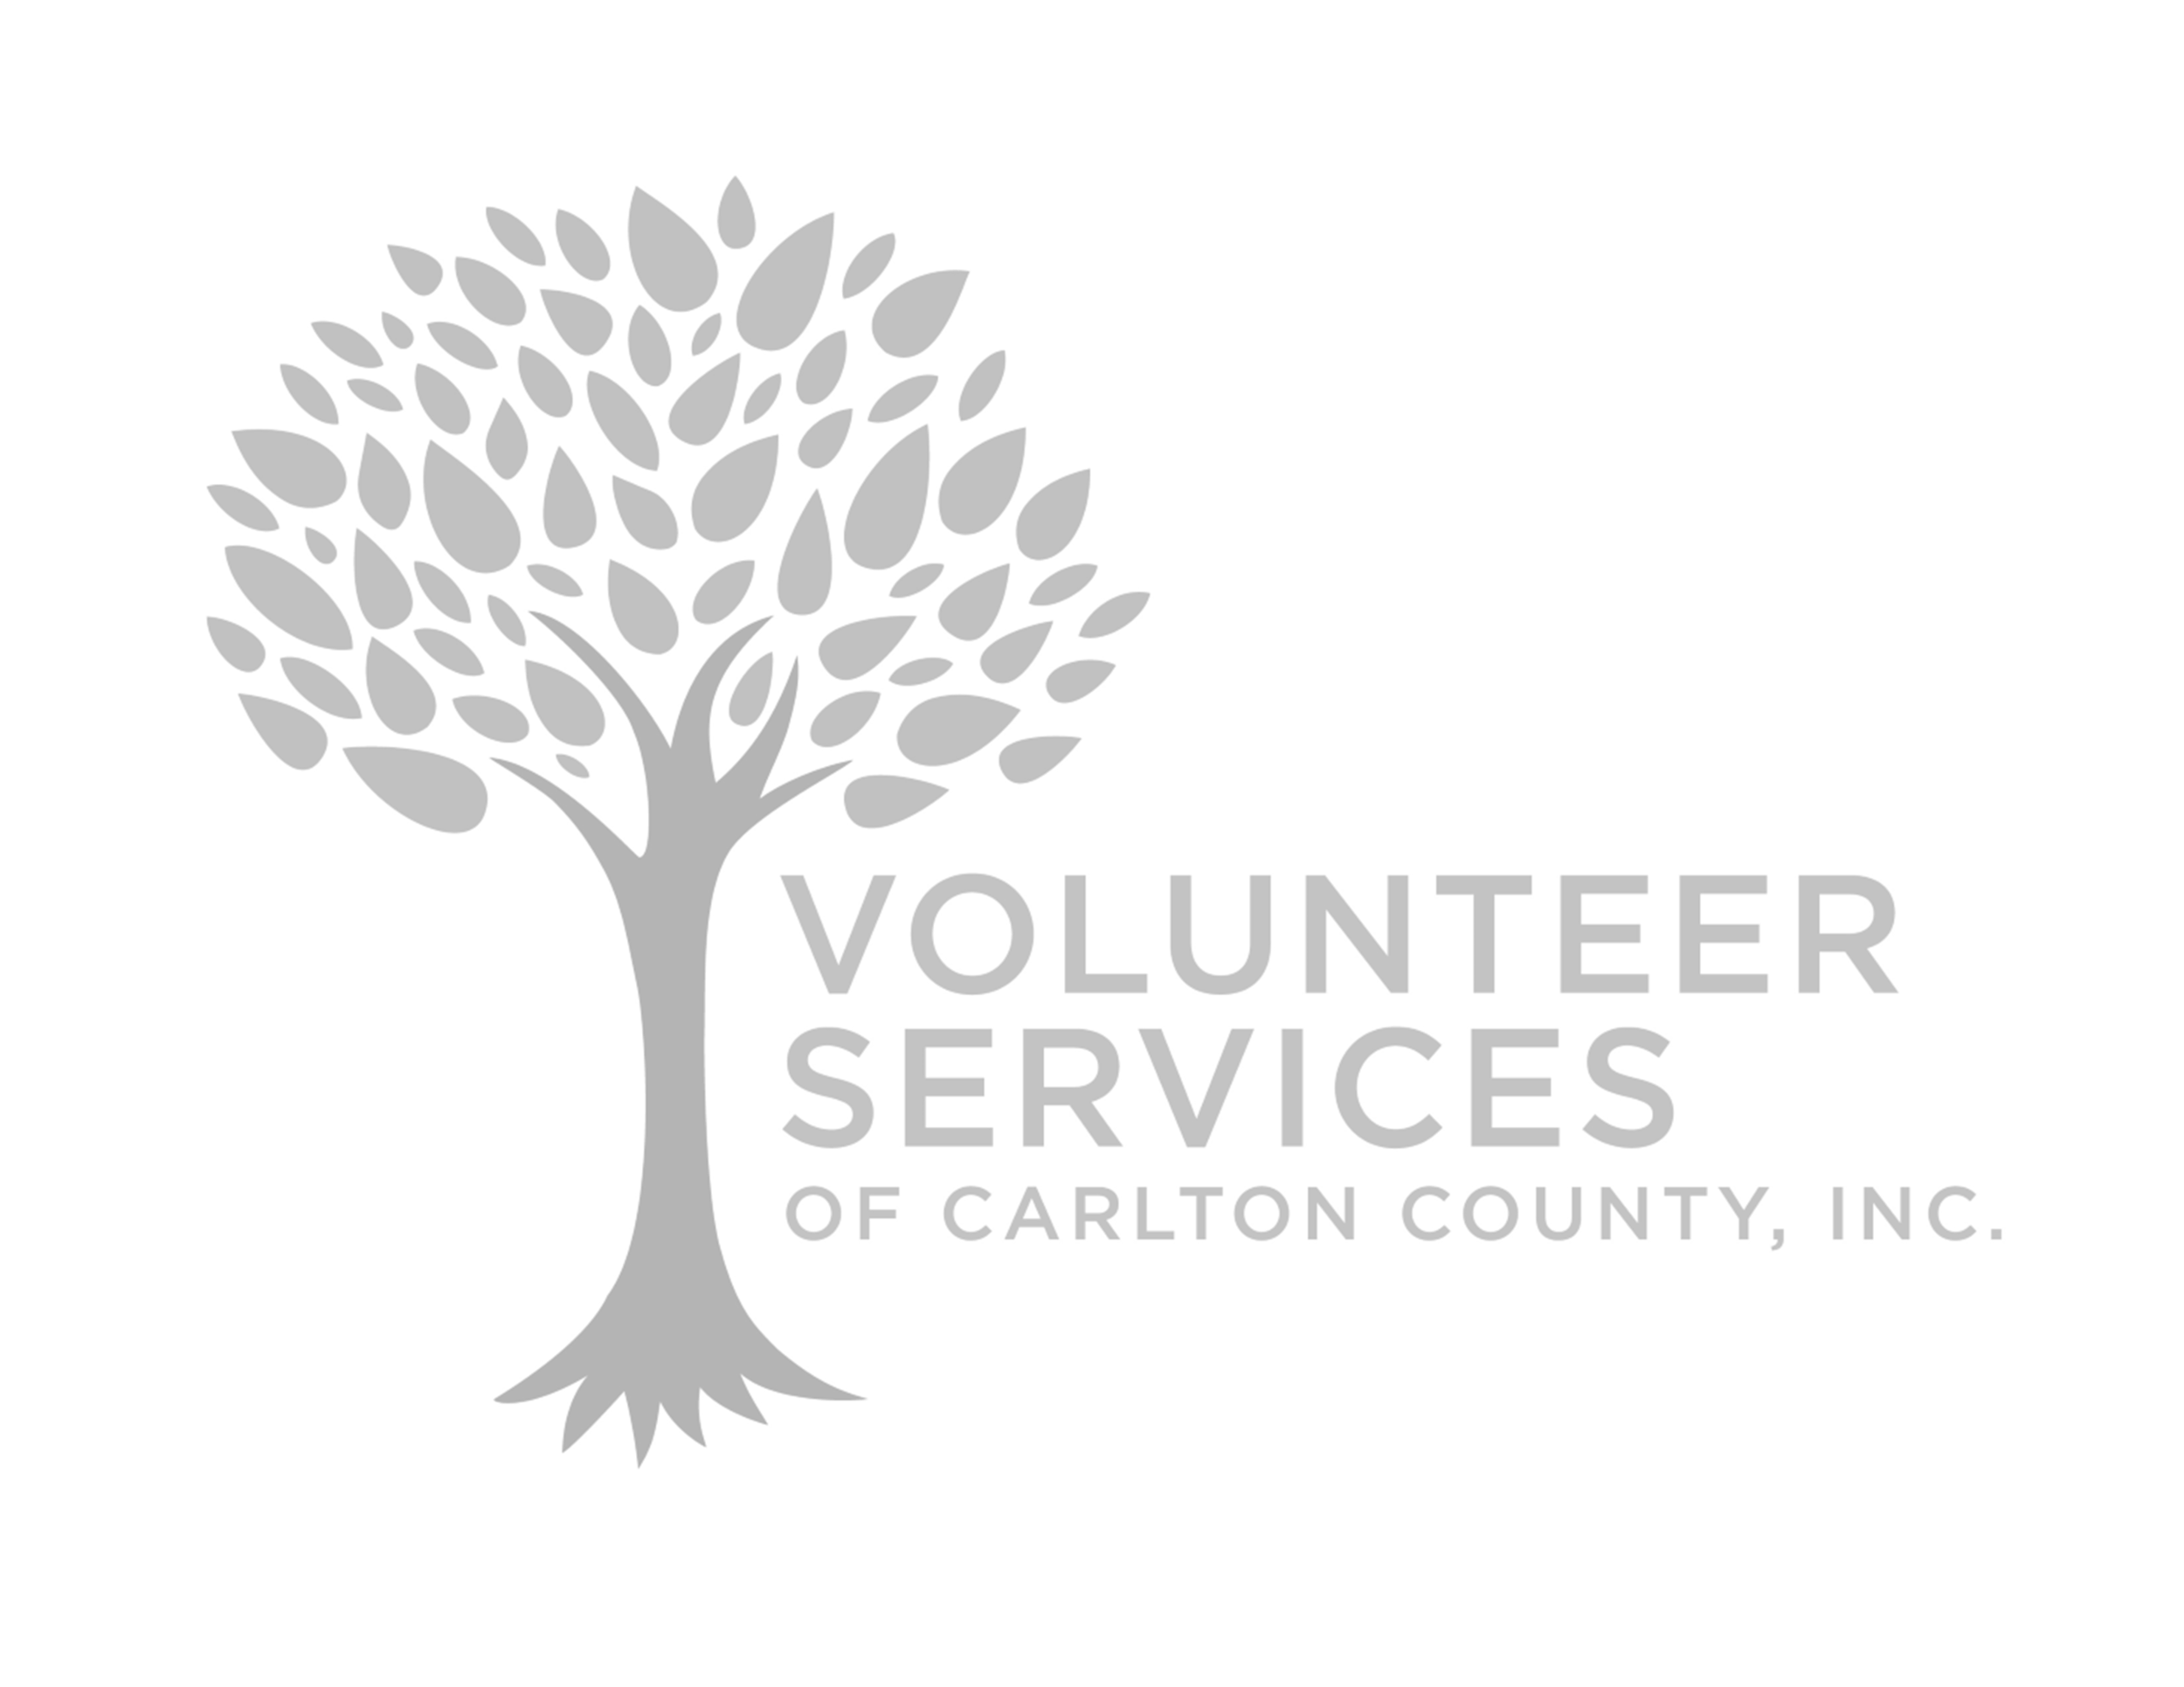 Volunteer Services of Carlton County logo